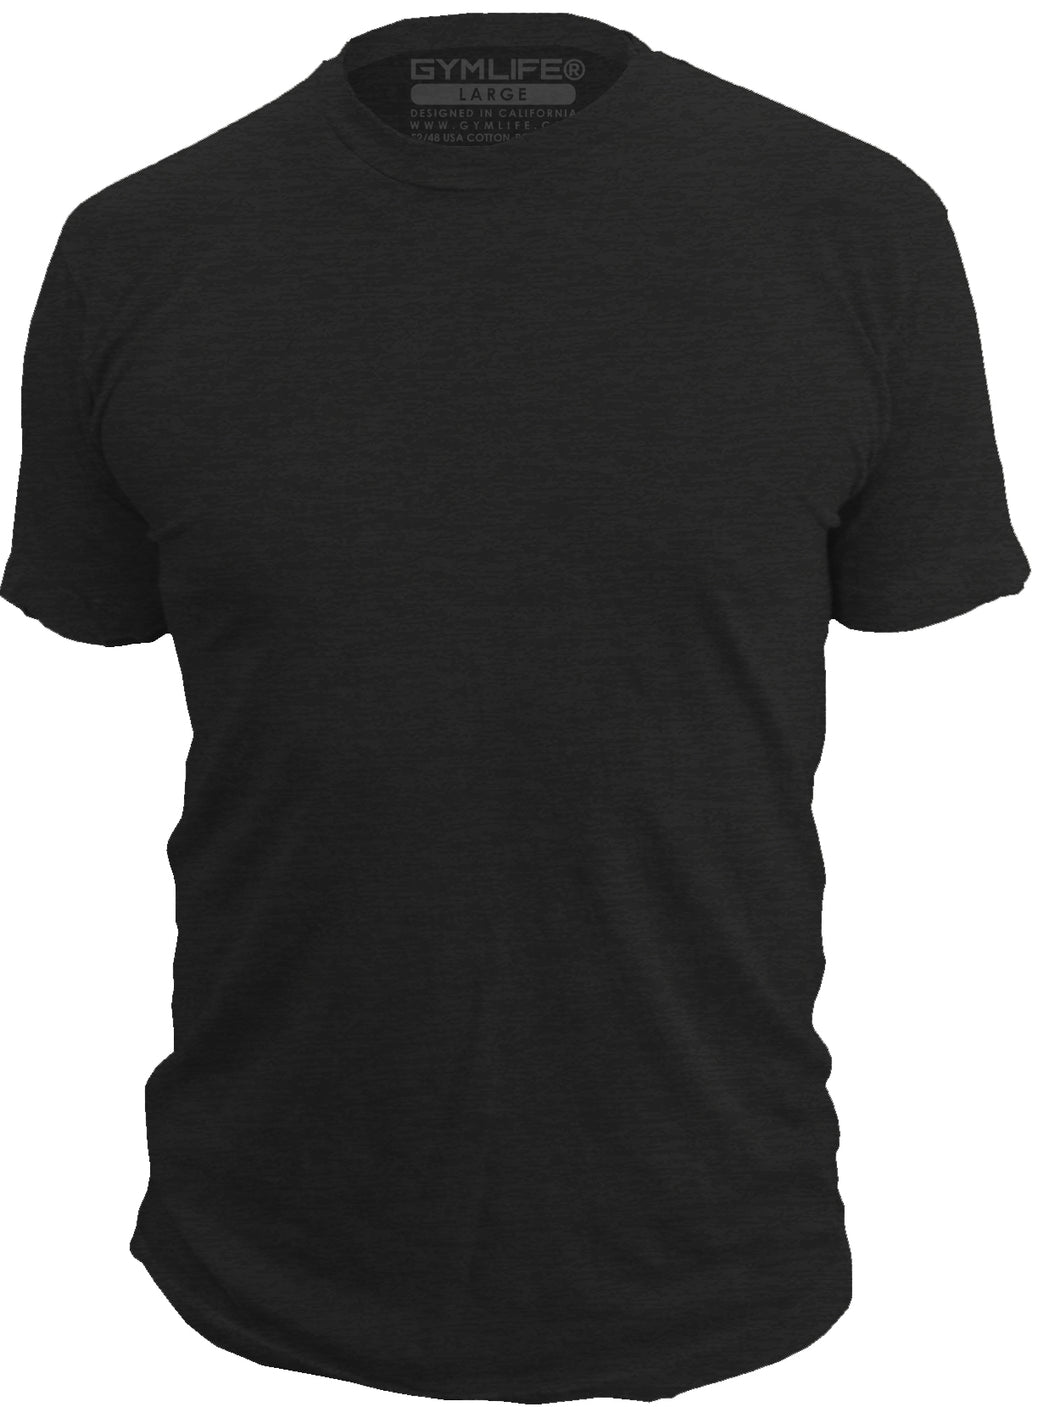 GYM LIFE - BLANK - Mens Athletic 52/48 Premium T-Shirt, Made of USA, Black